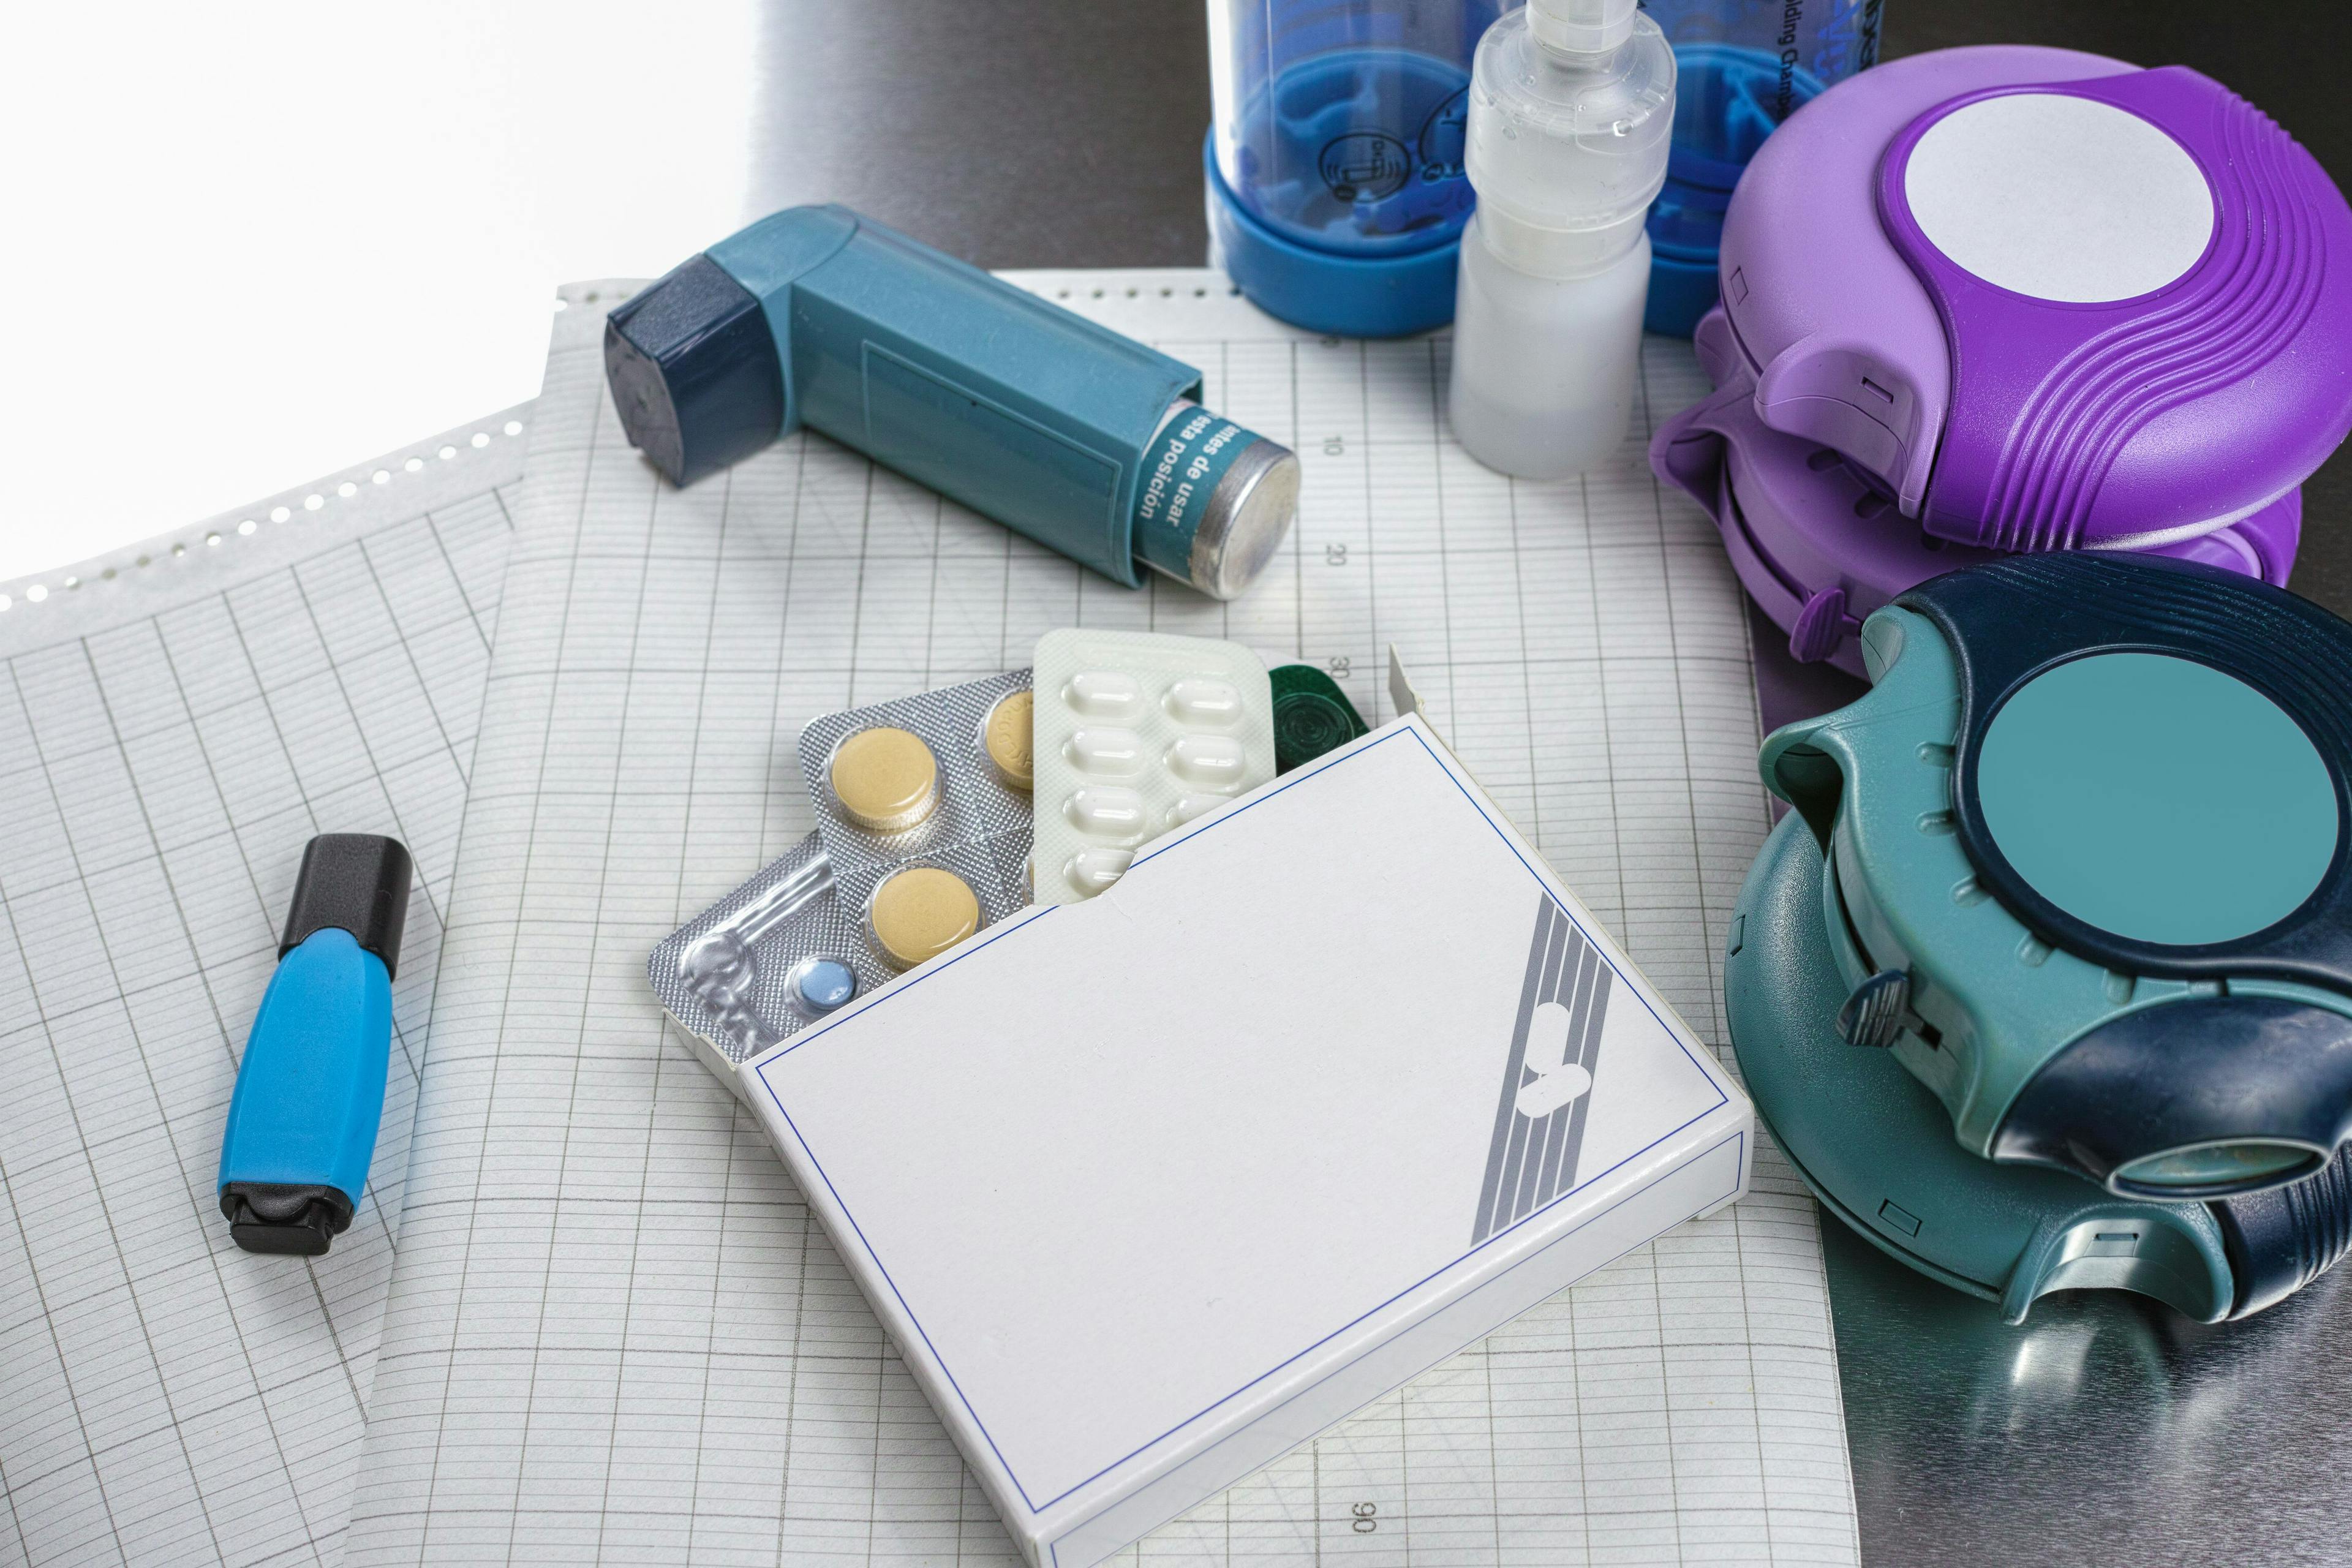 Asthma, allergy, illness relief concept, salbutamol inhalers and drugs | Image credit: barmilini - stock.adobe.com